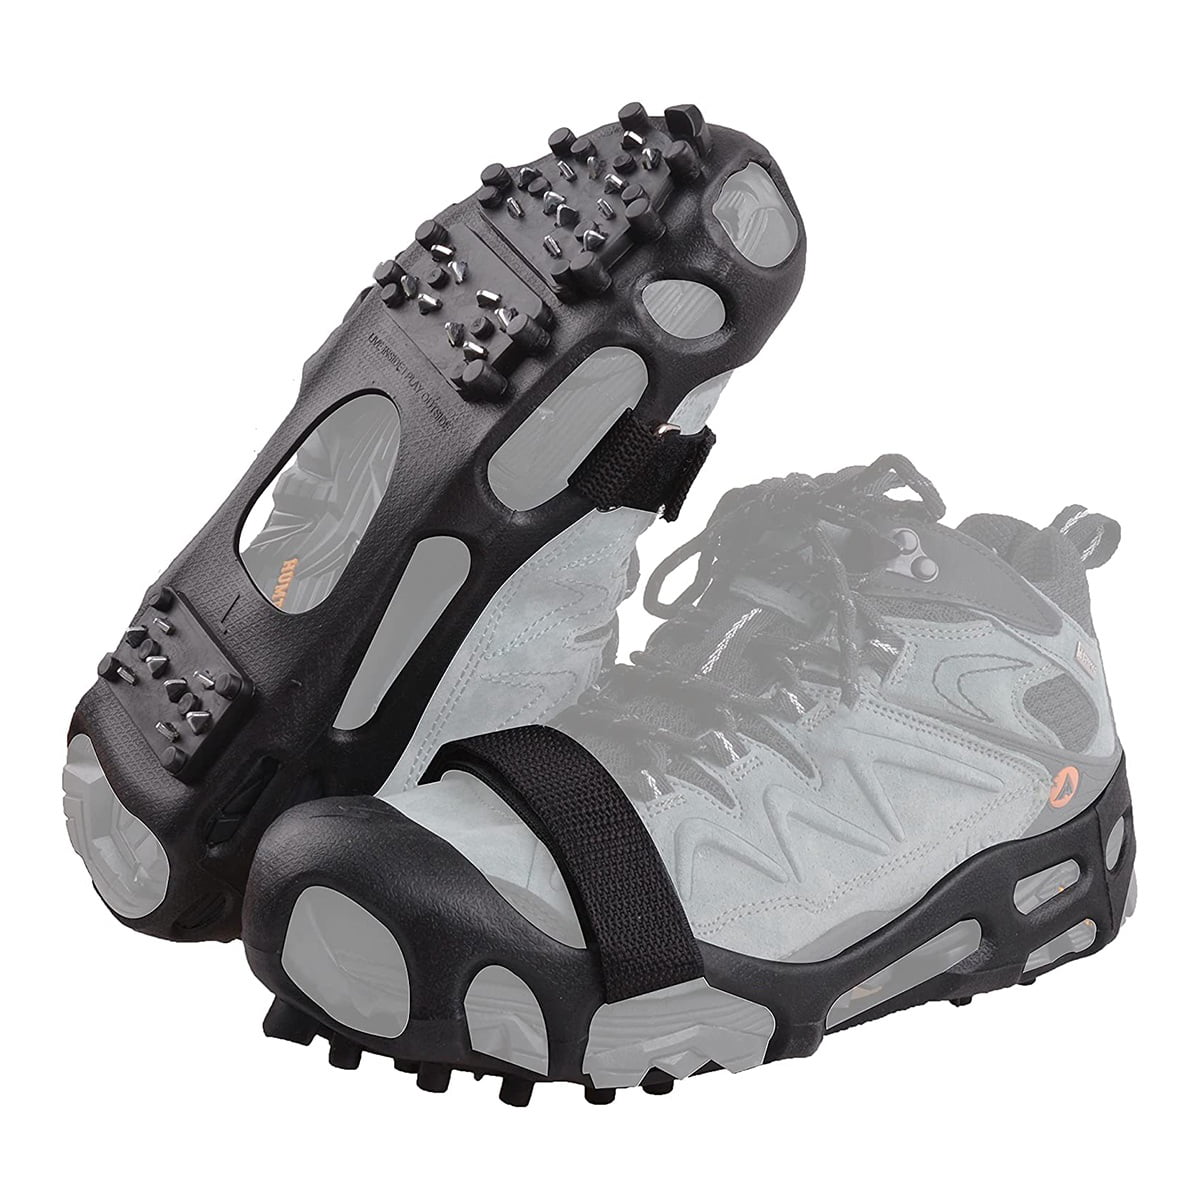 MEDIUM ICE GRIPPERS Shoe Size 4-6 Anti Slip Snow Walking Hiking Metal Spike Stud 